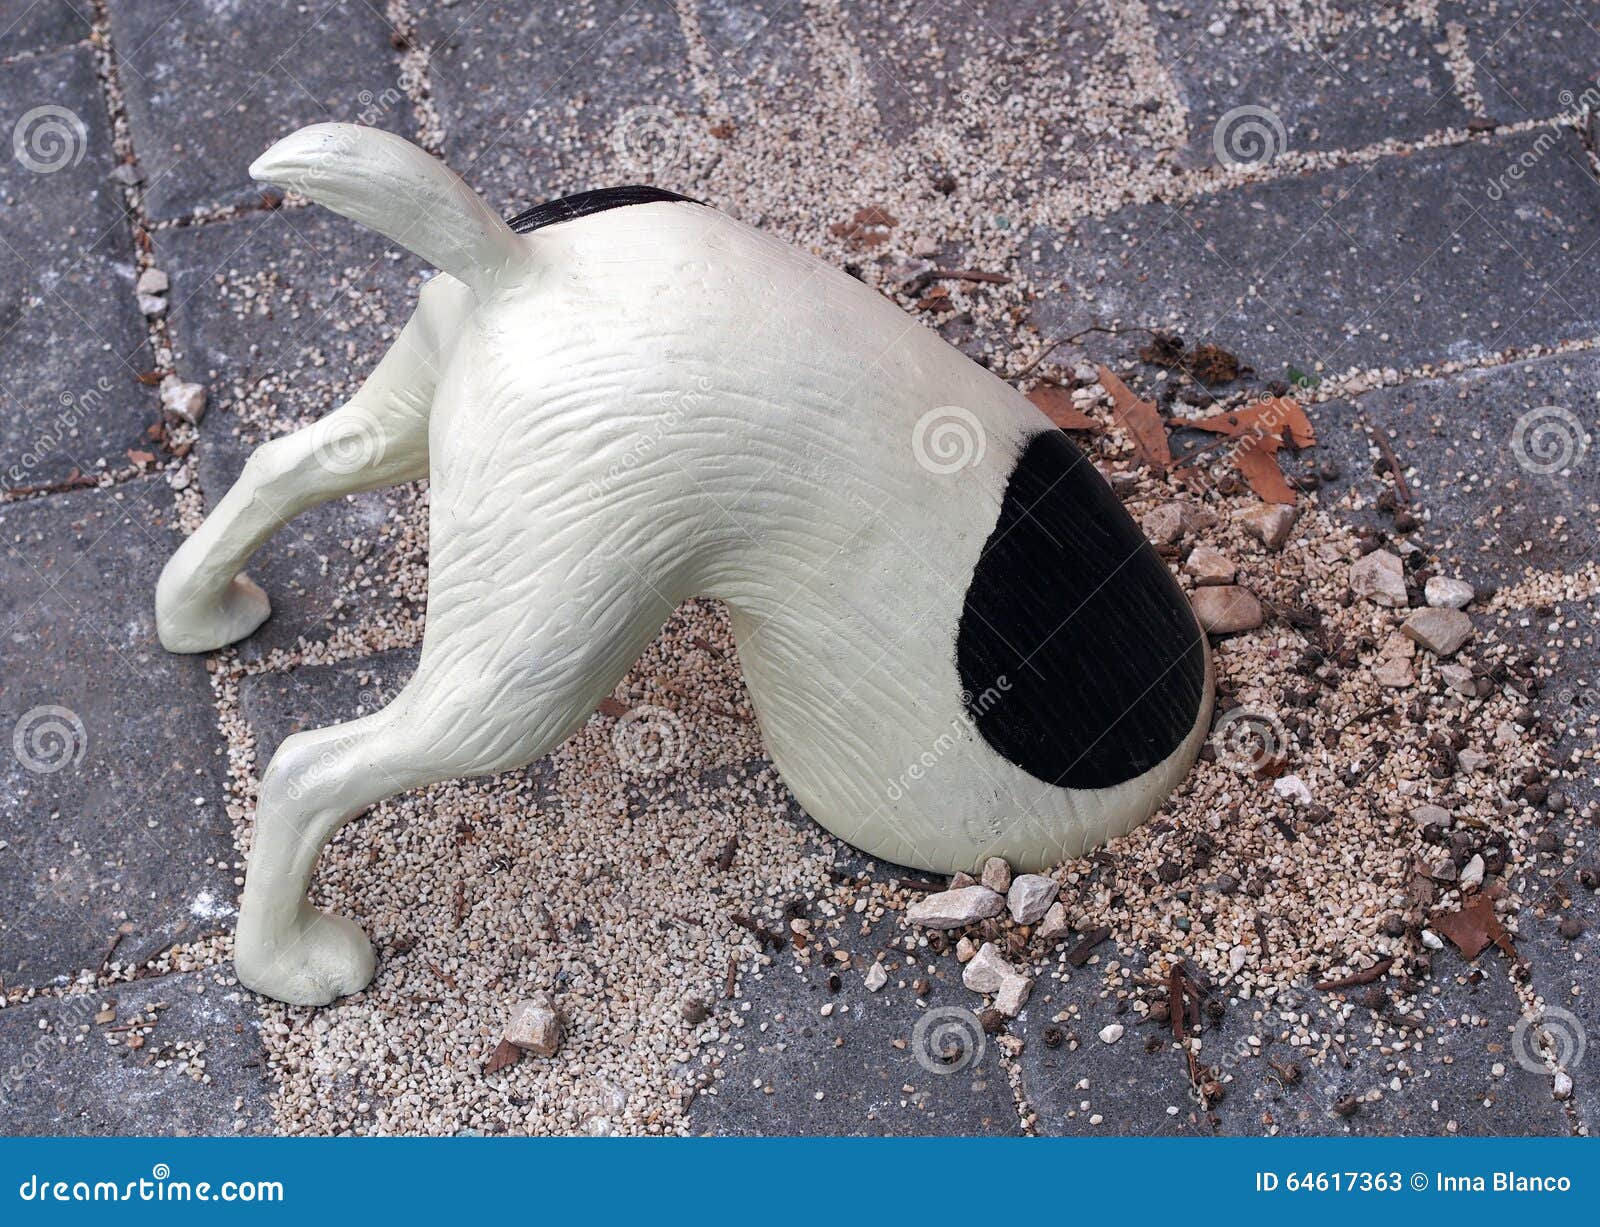 funny figurine of digging dog